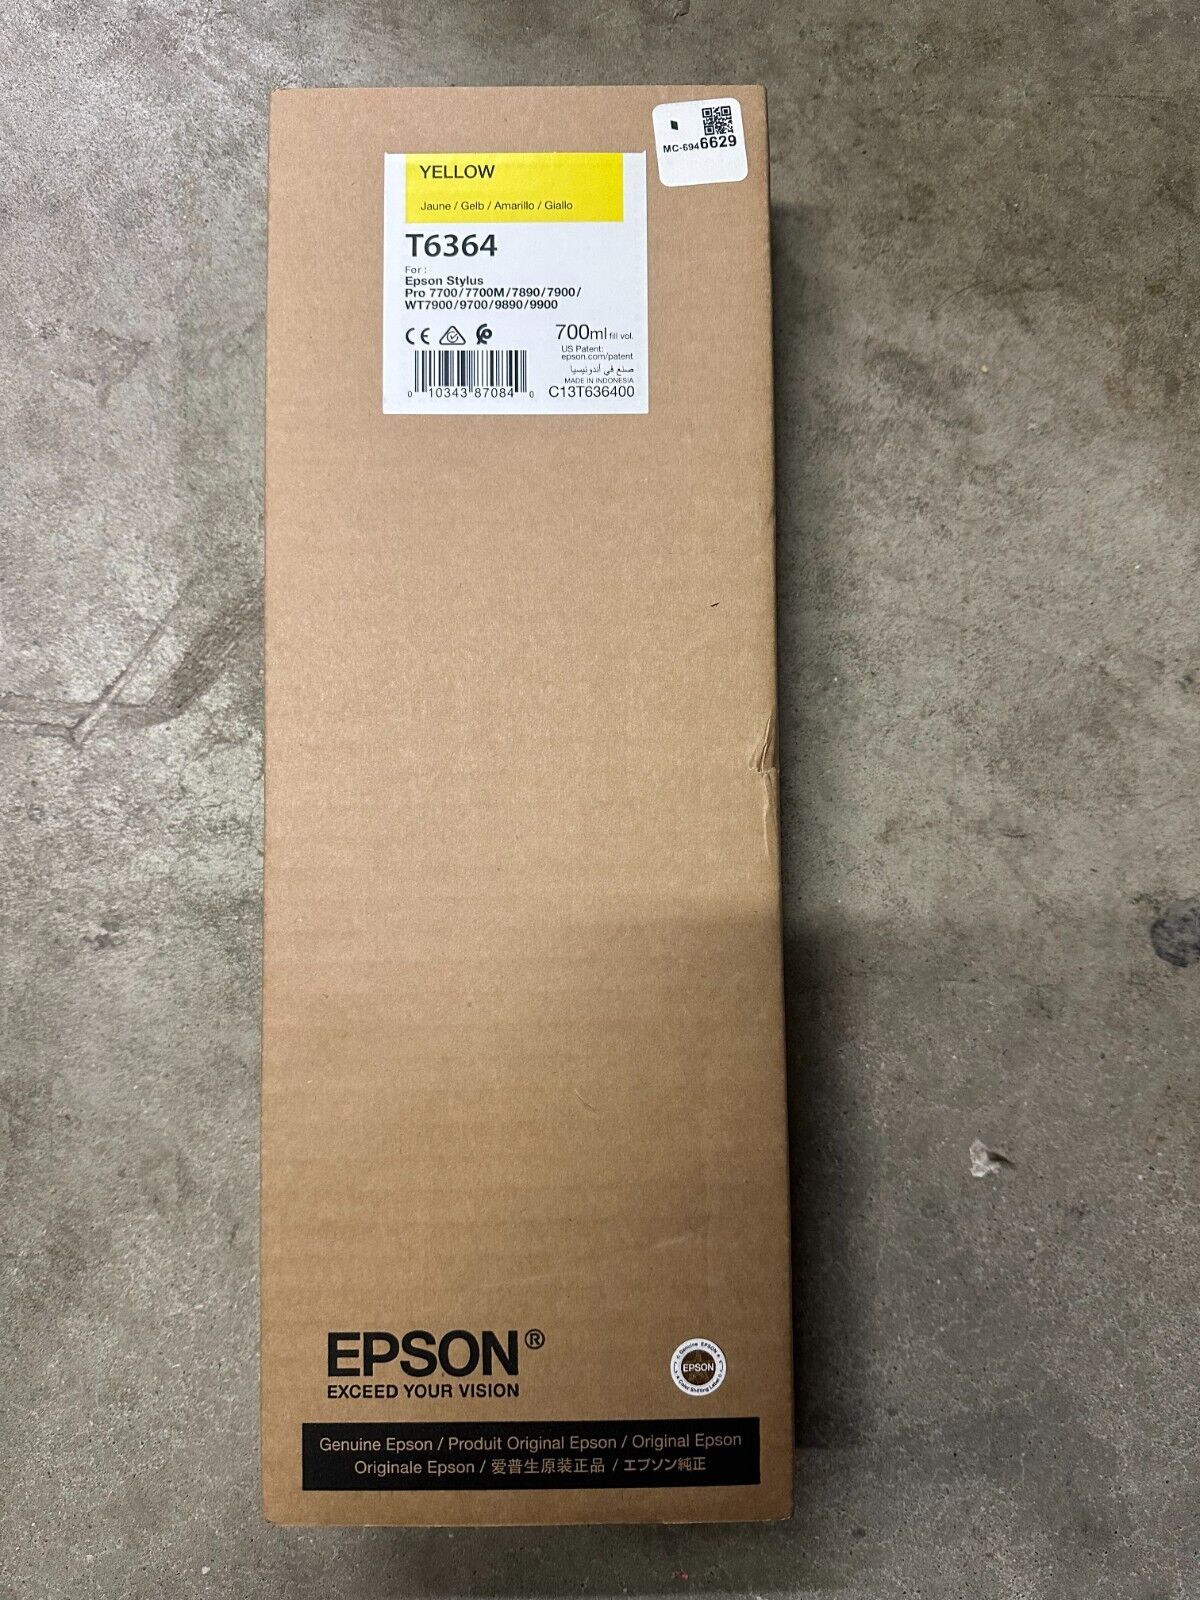 Epson T6364 Yellow 700ml Ink Cartridge EXP 2023 06 21